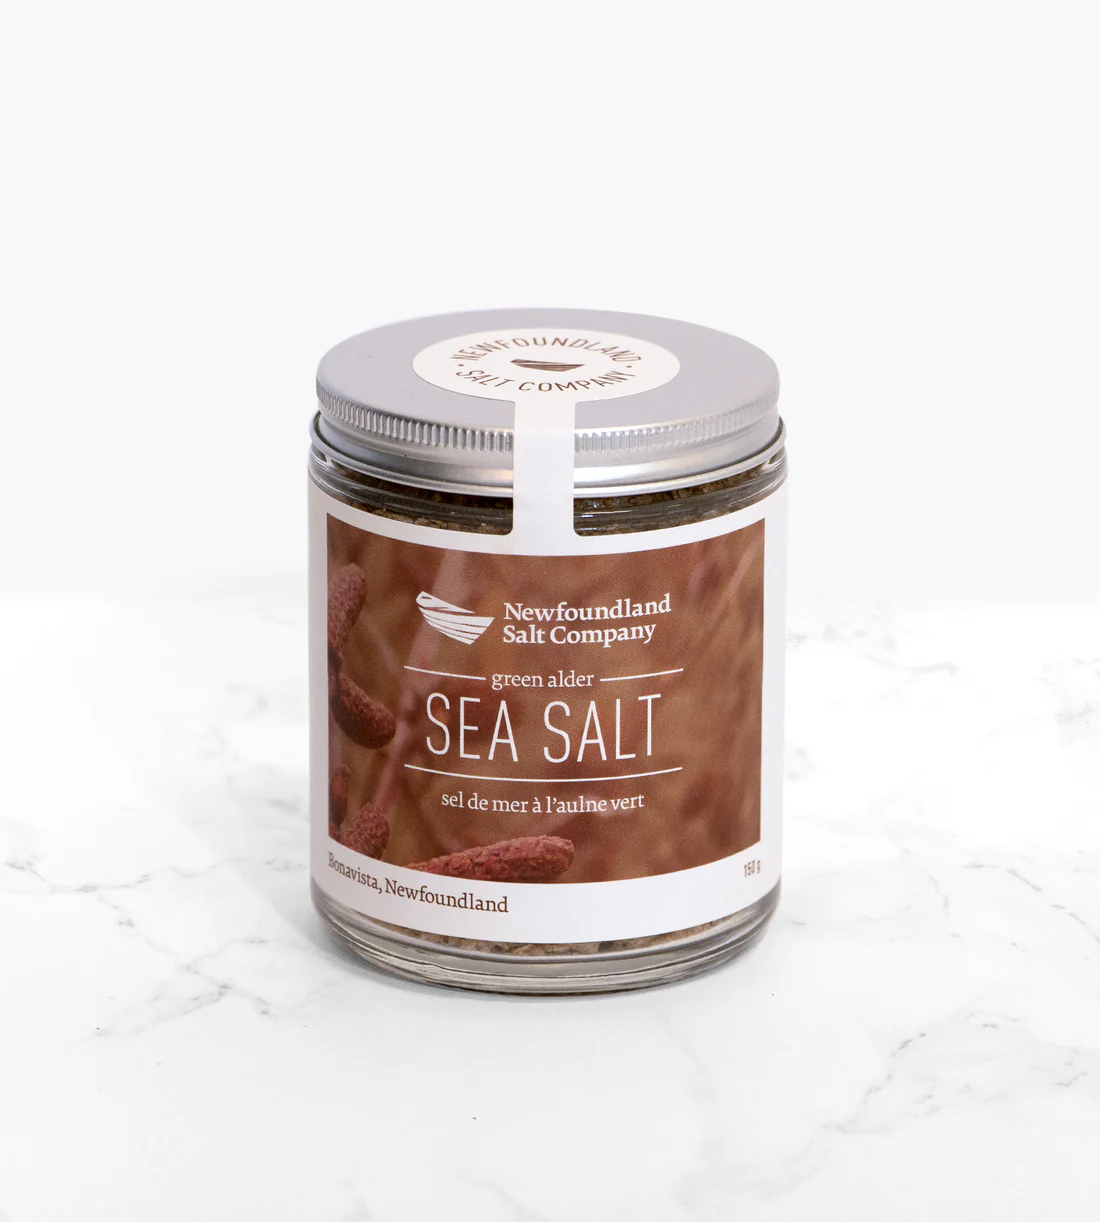 Newfoundland Green Alder Sea Salt